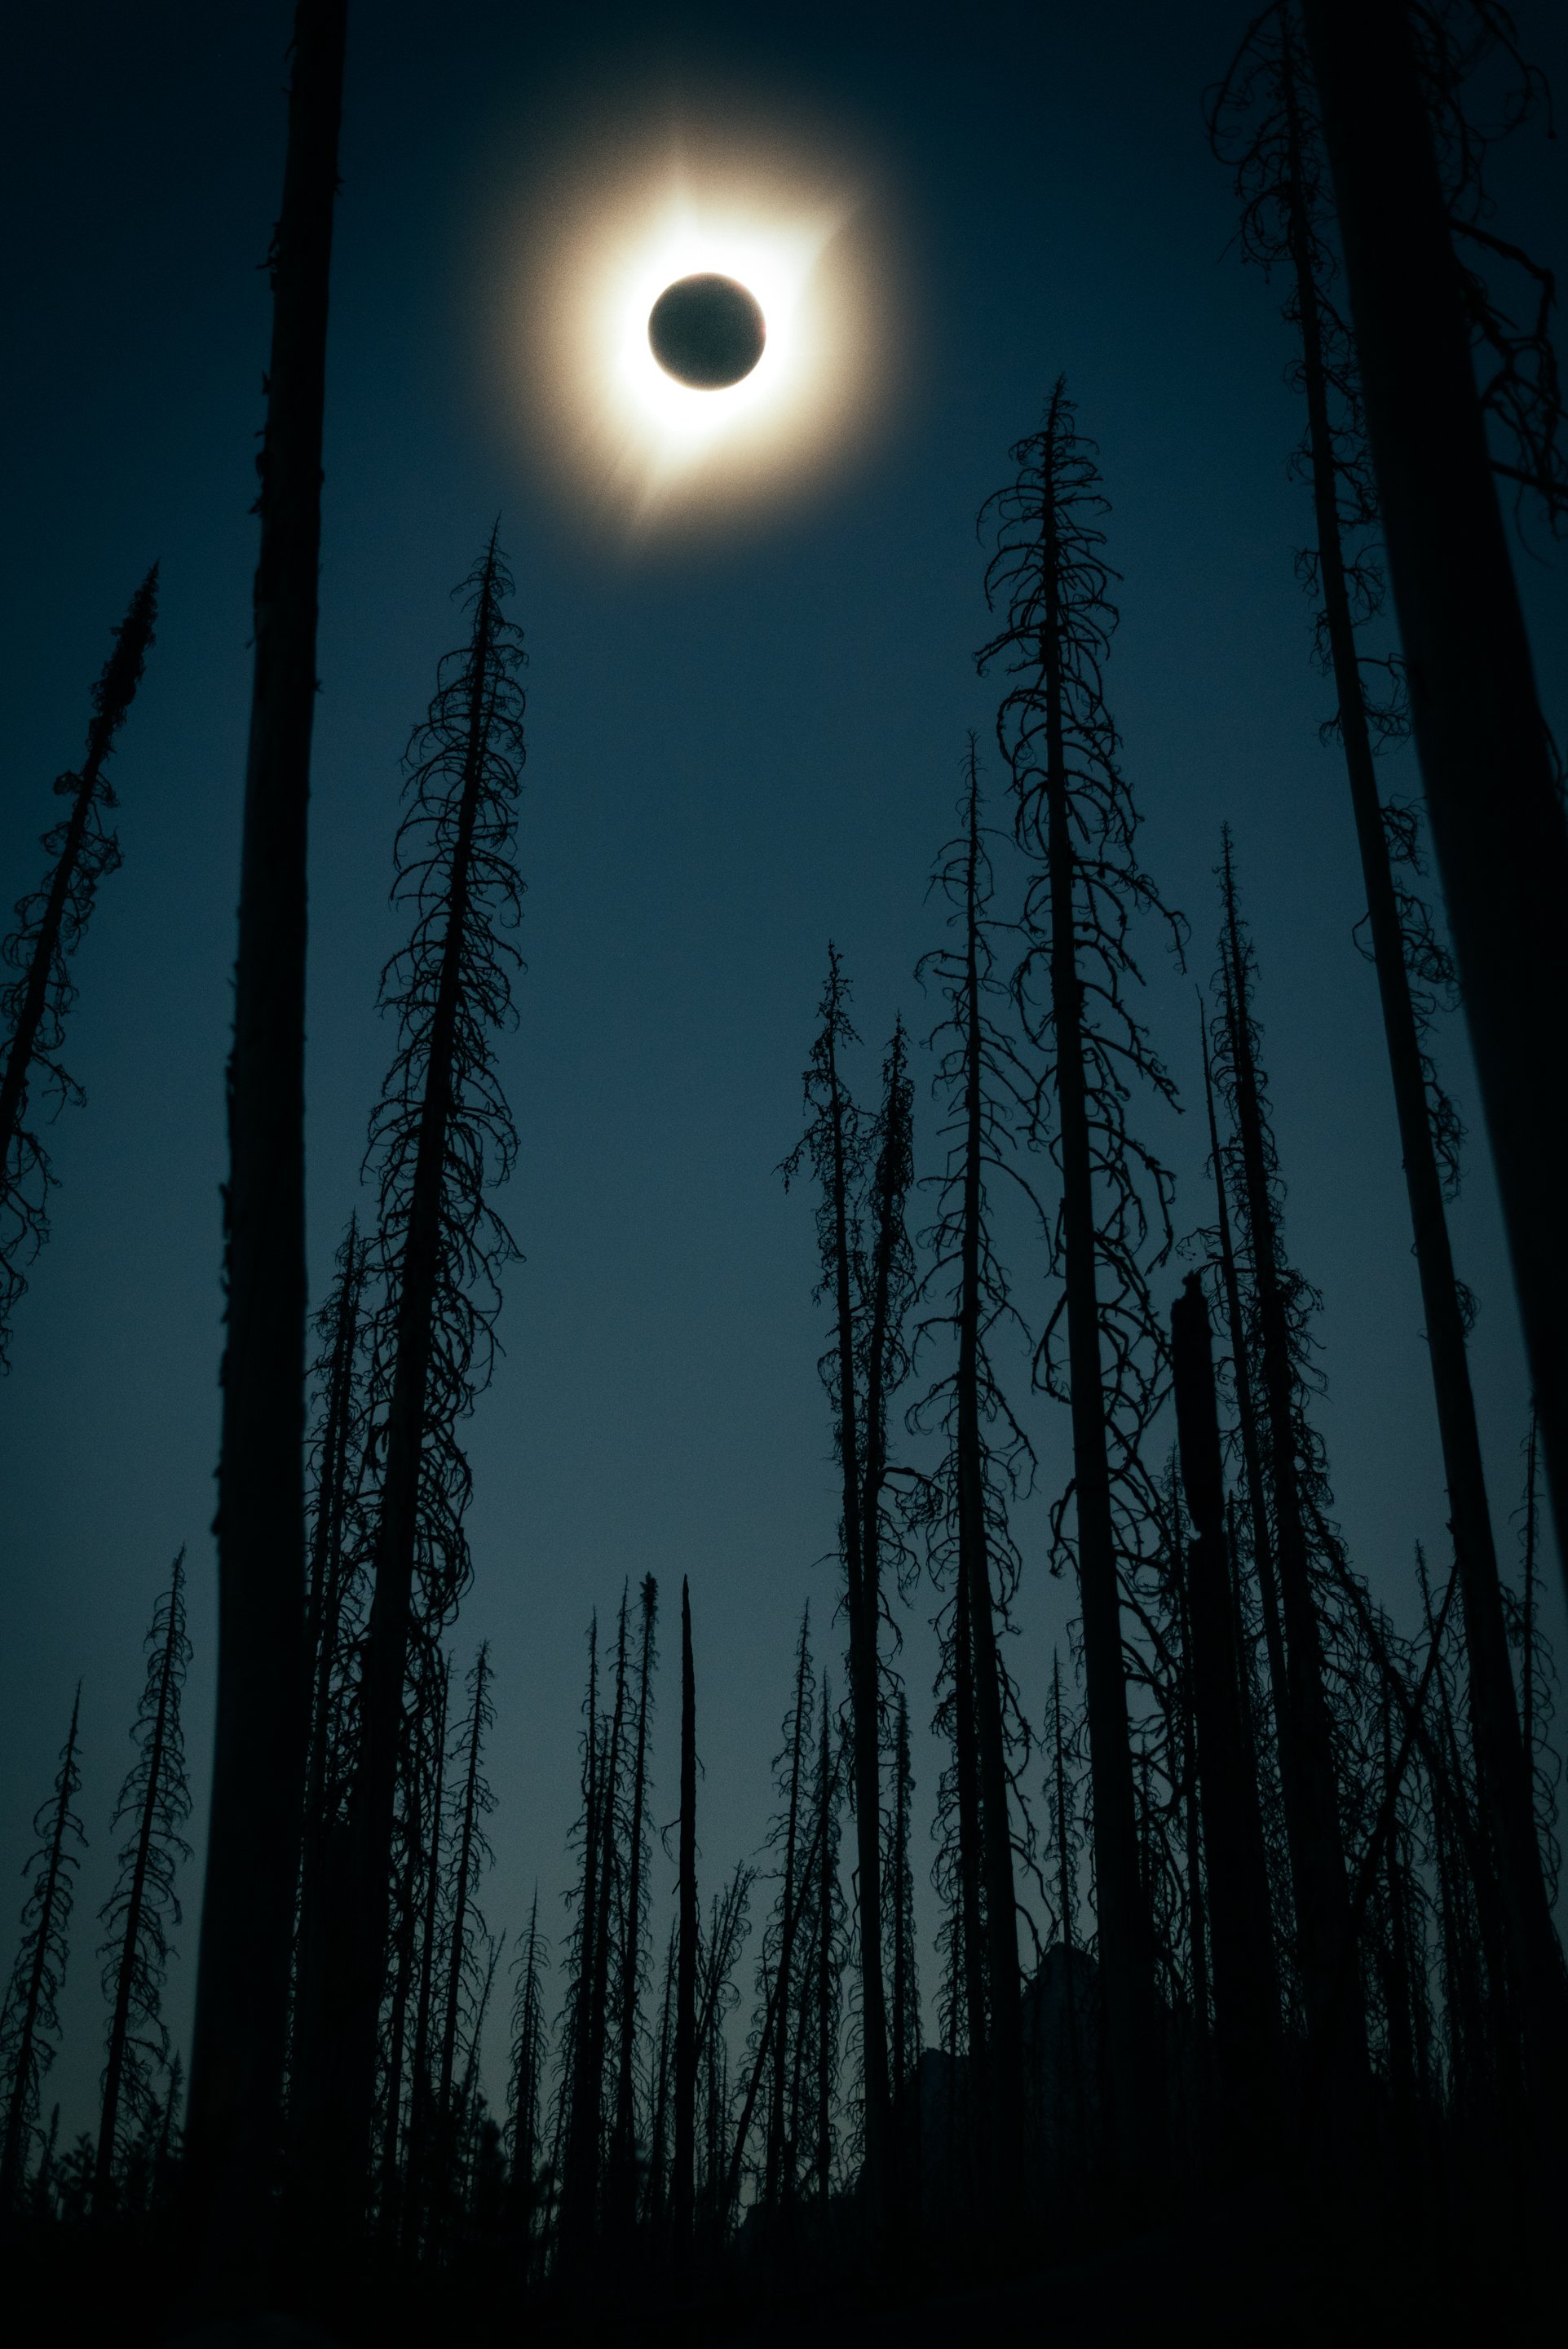 Eclipse-ChrisBrinleeJr-AUG17-1.jpg